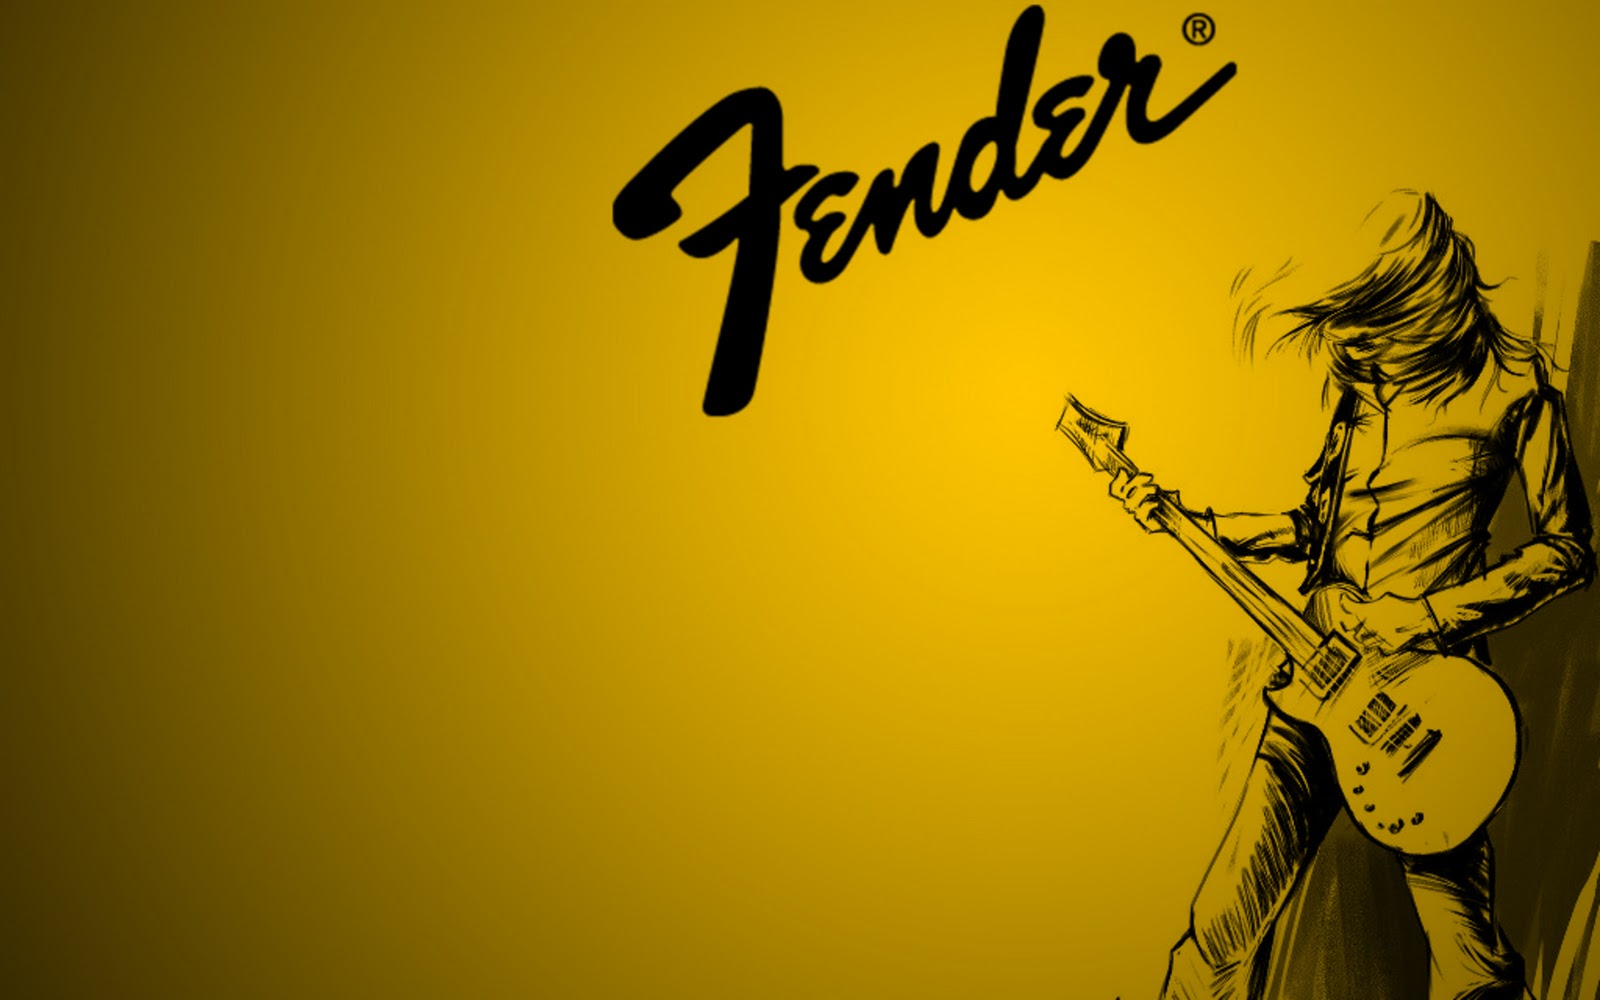 Fender Stratocaster Wallpaper Free Desktop Hd Ipad Iphone Wallpapers Guitar Wallpaper